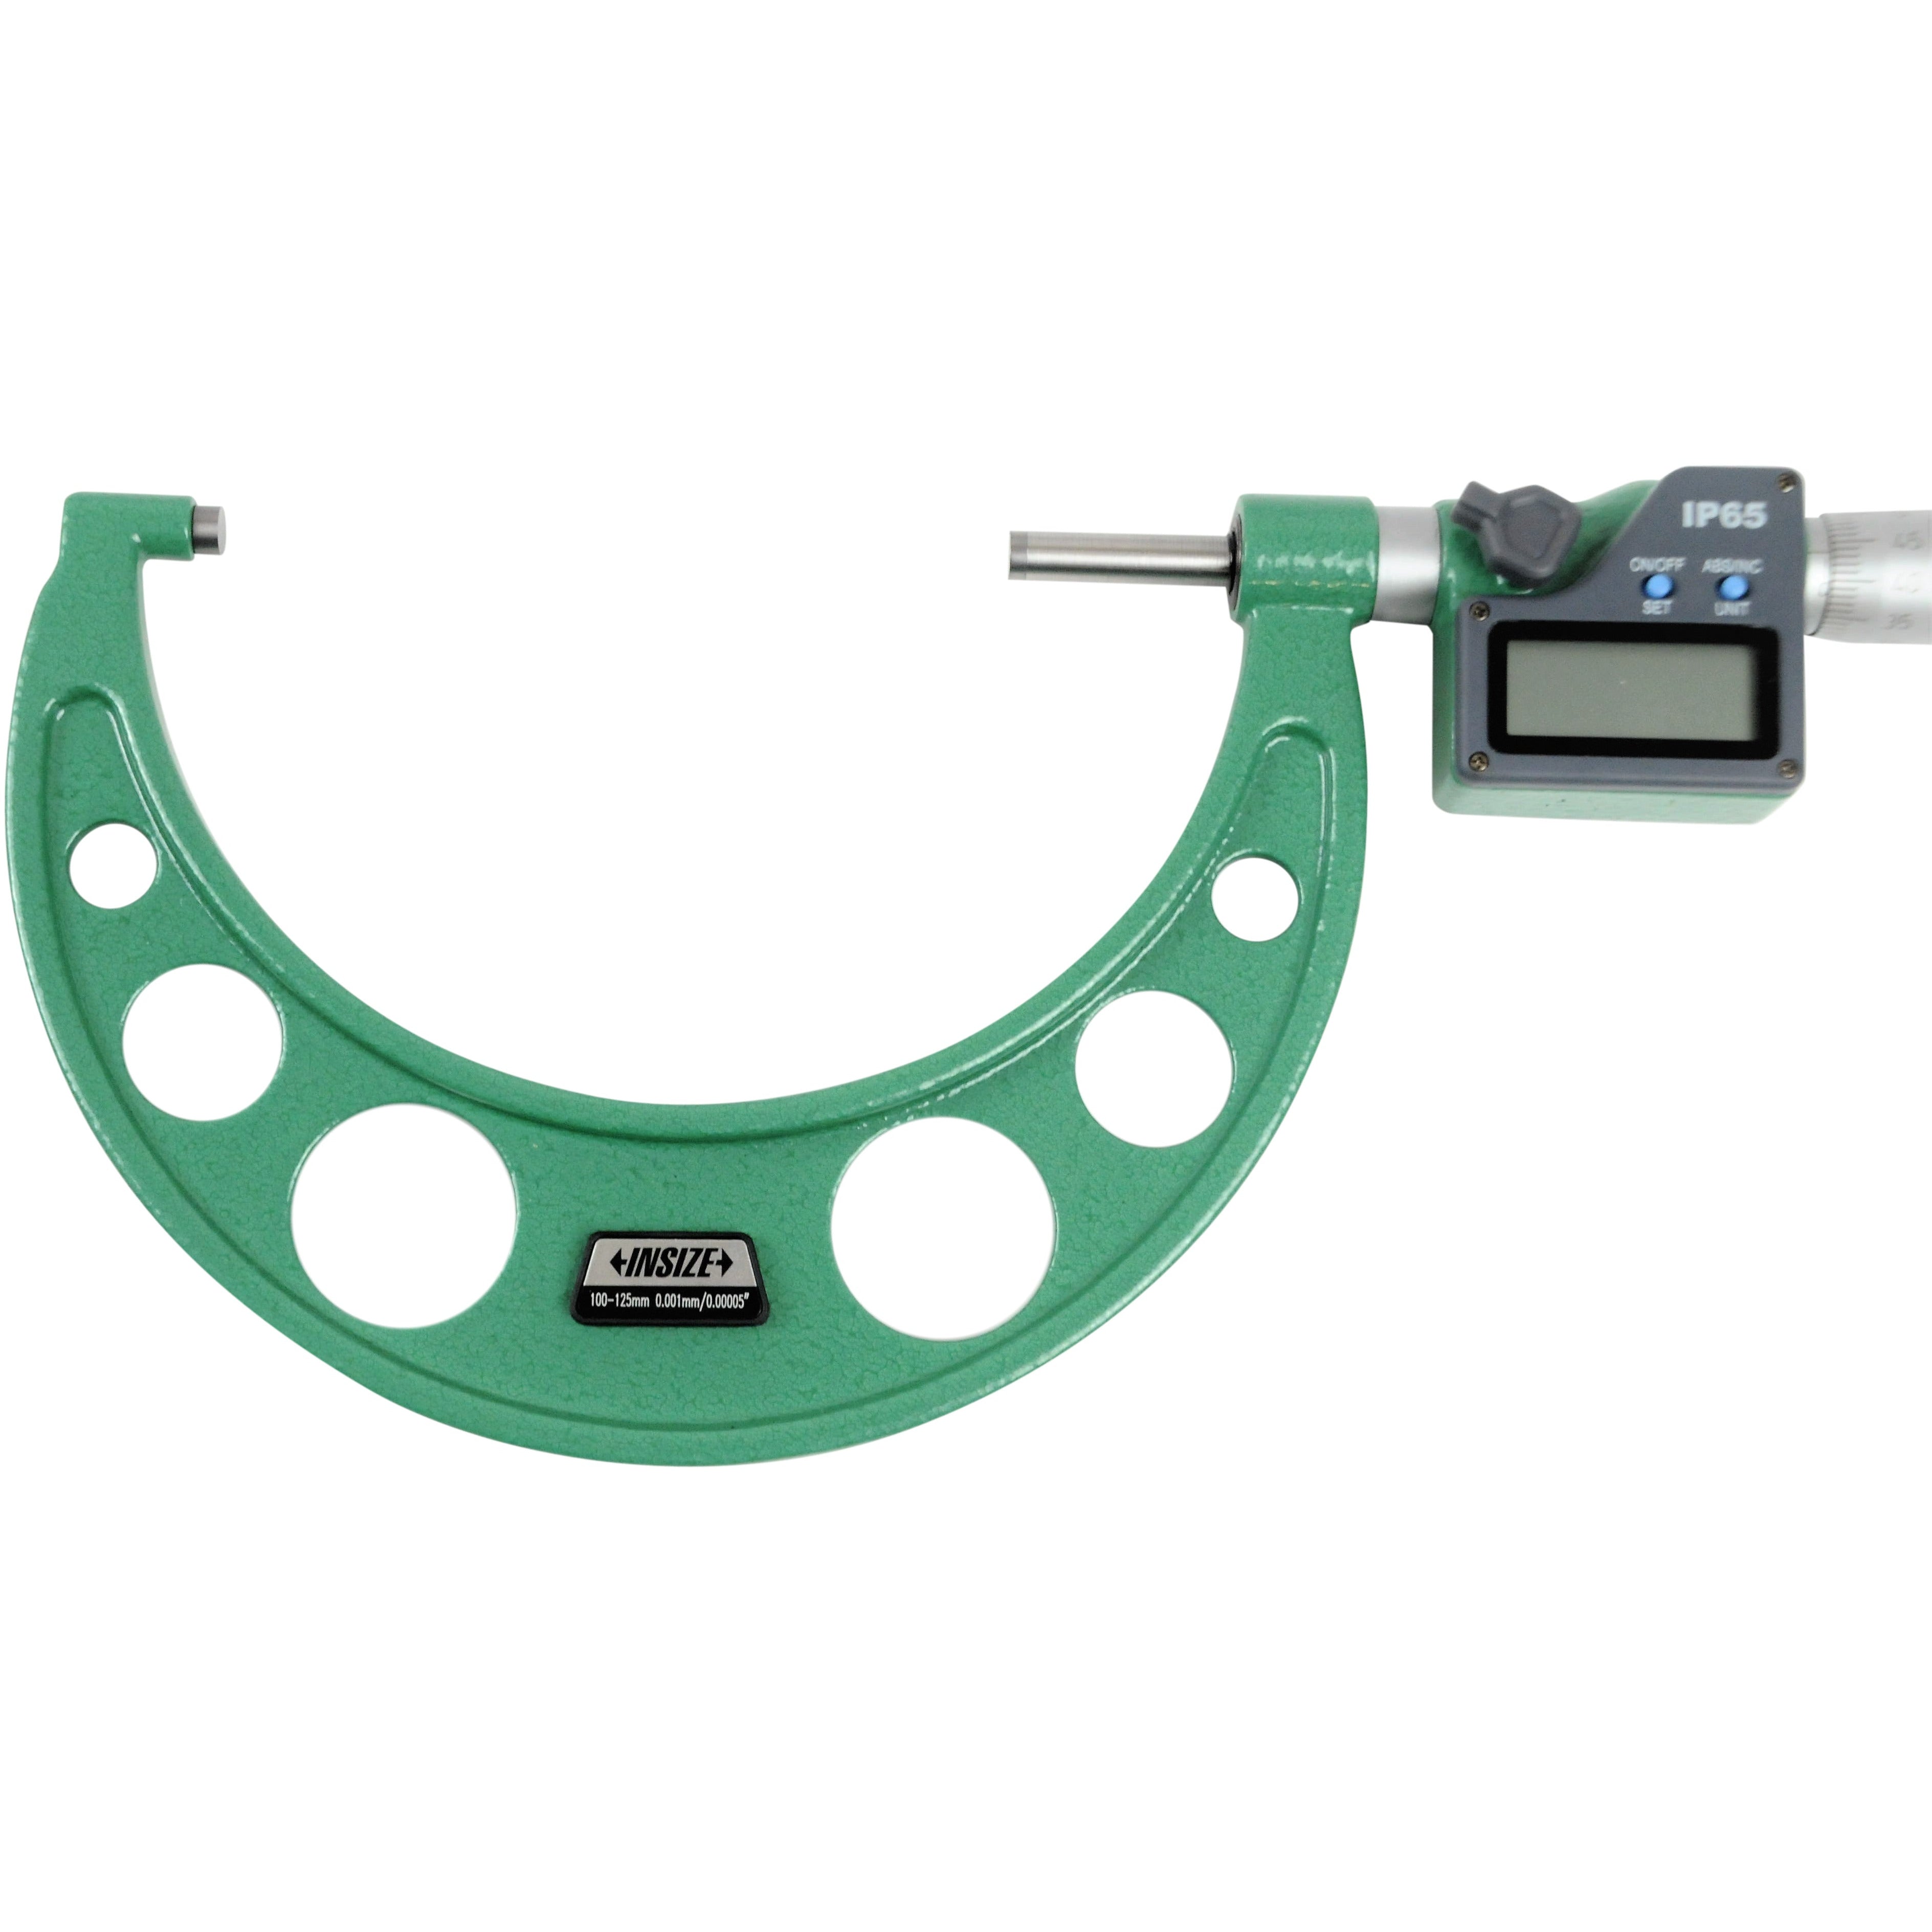 Insize IP65 Digital Outside Micrometer 100-125mm / 4-5" Range Series 3108-125A